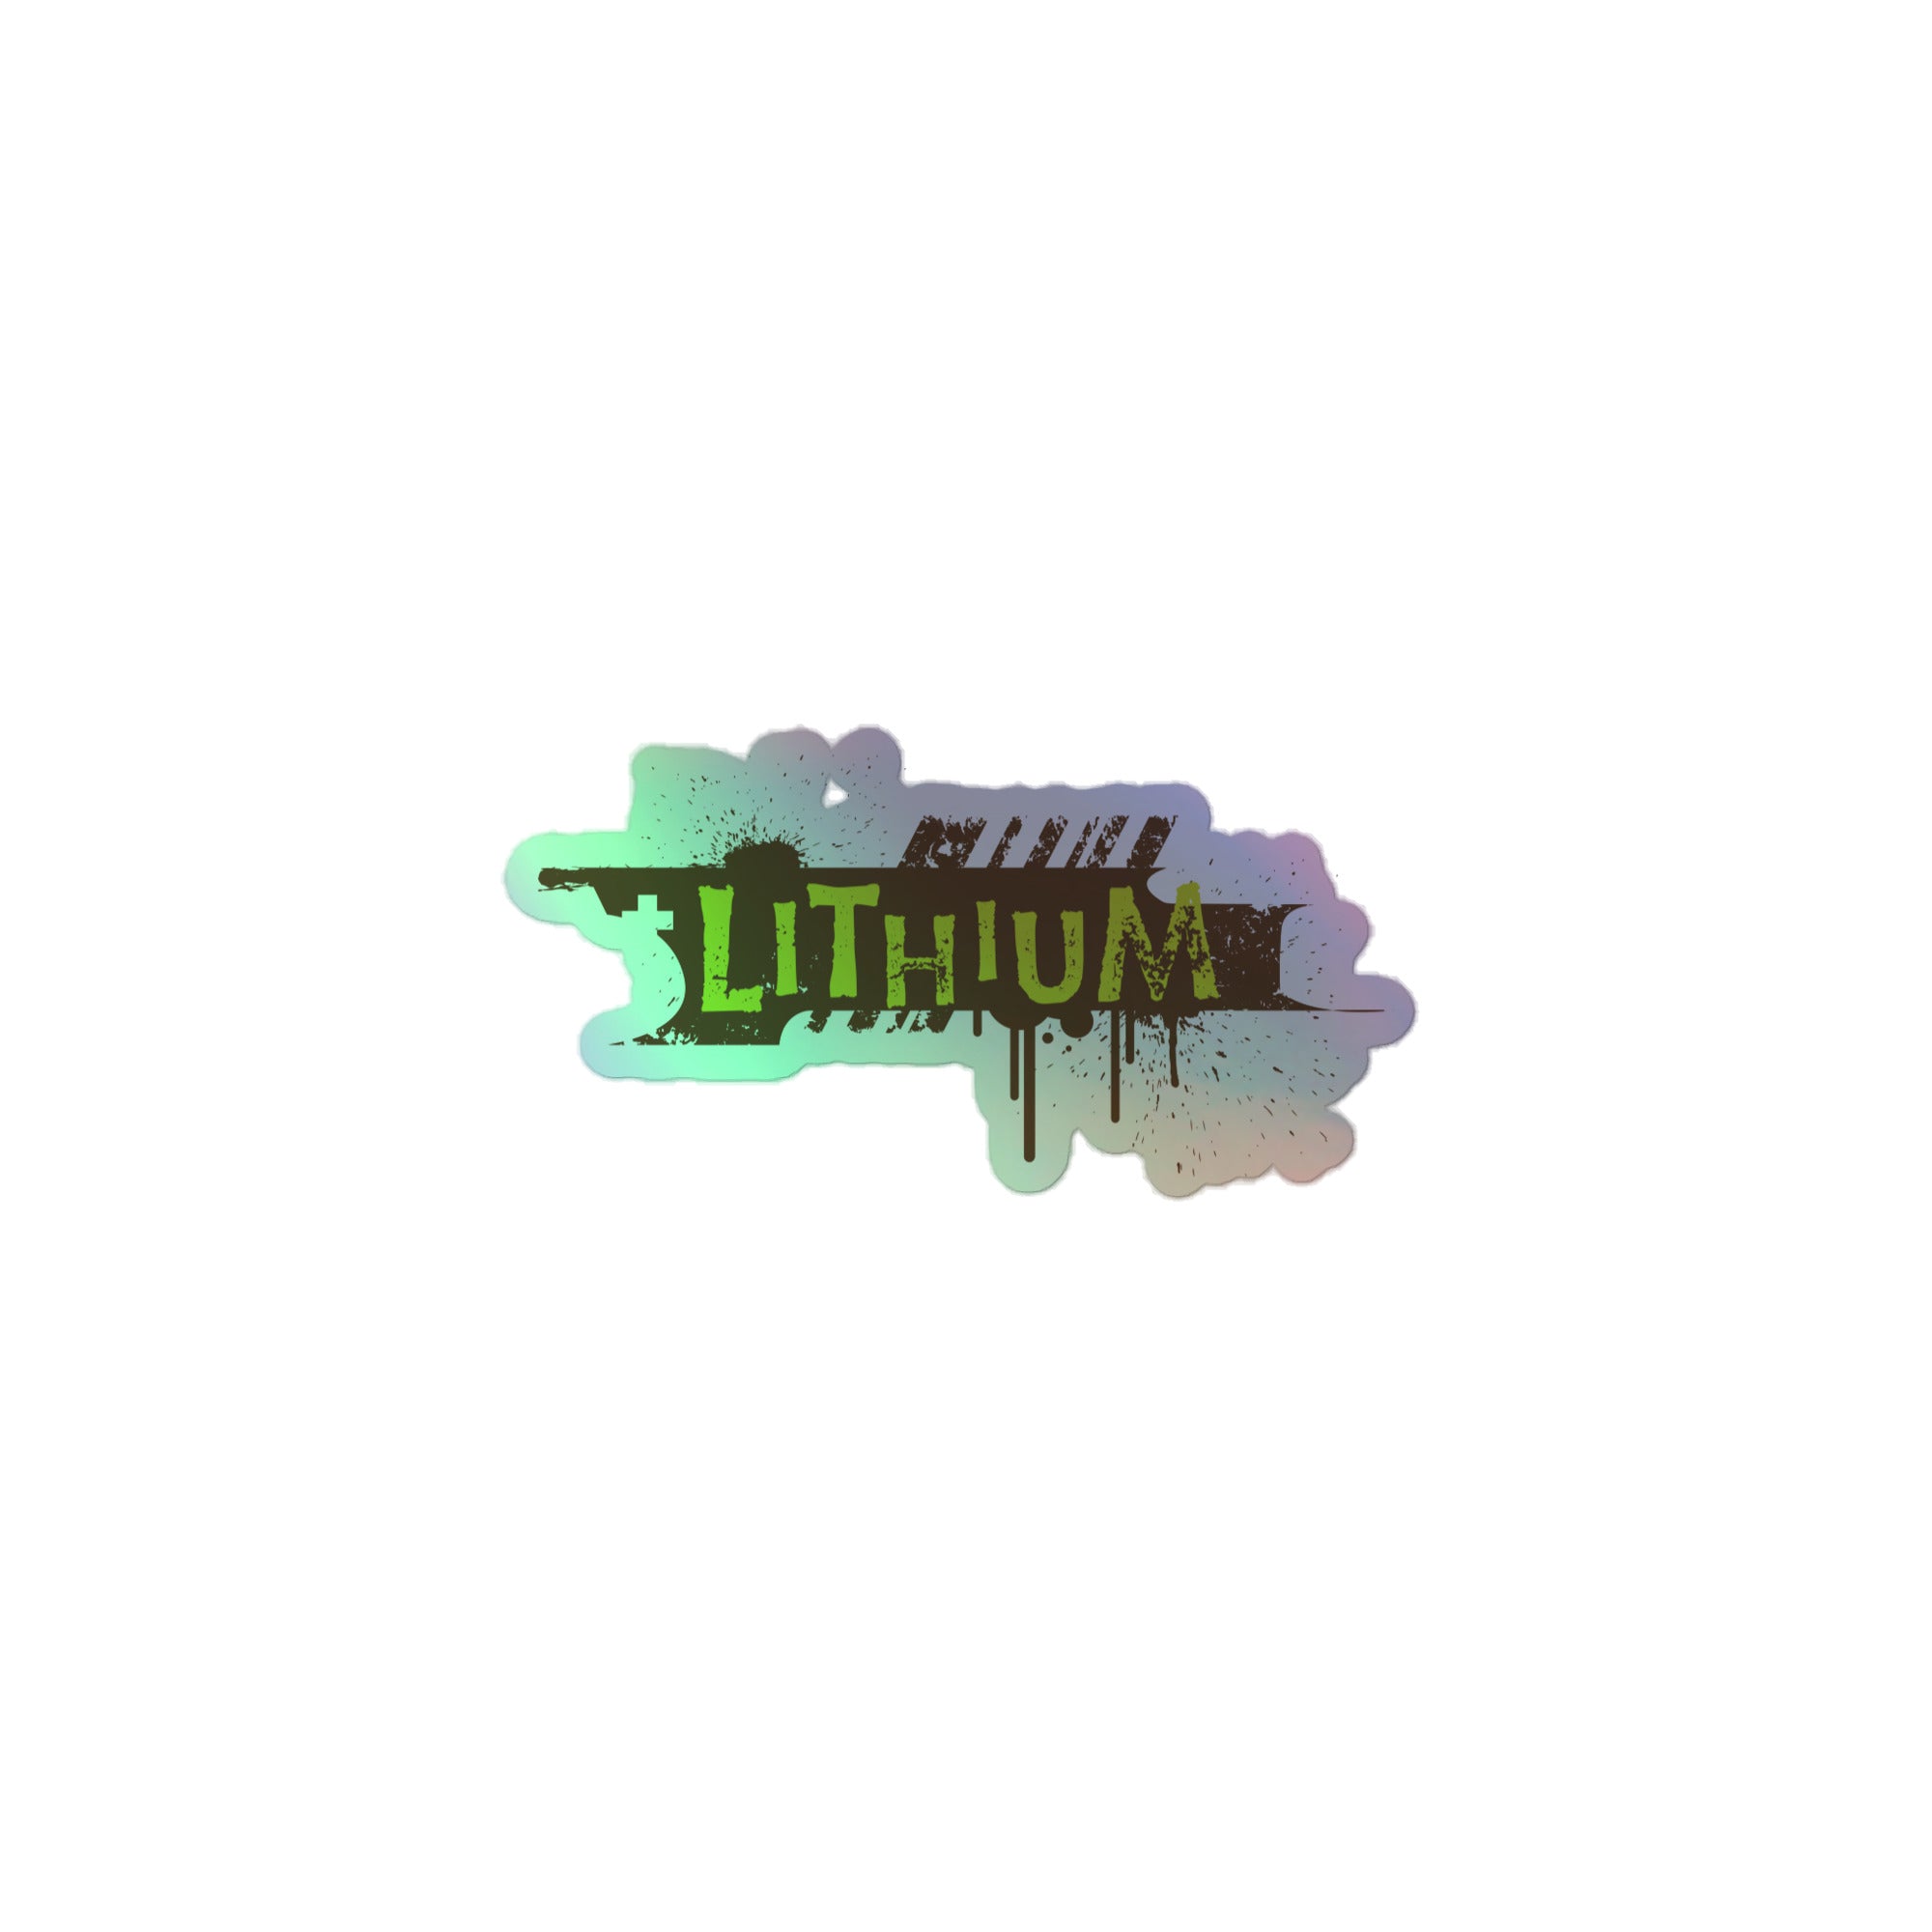 Lithium: Holographic Sticker